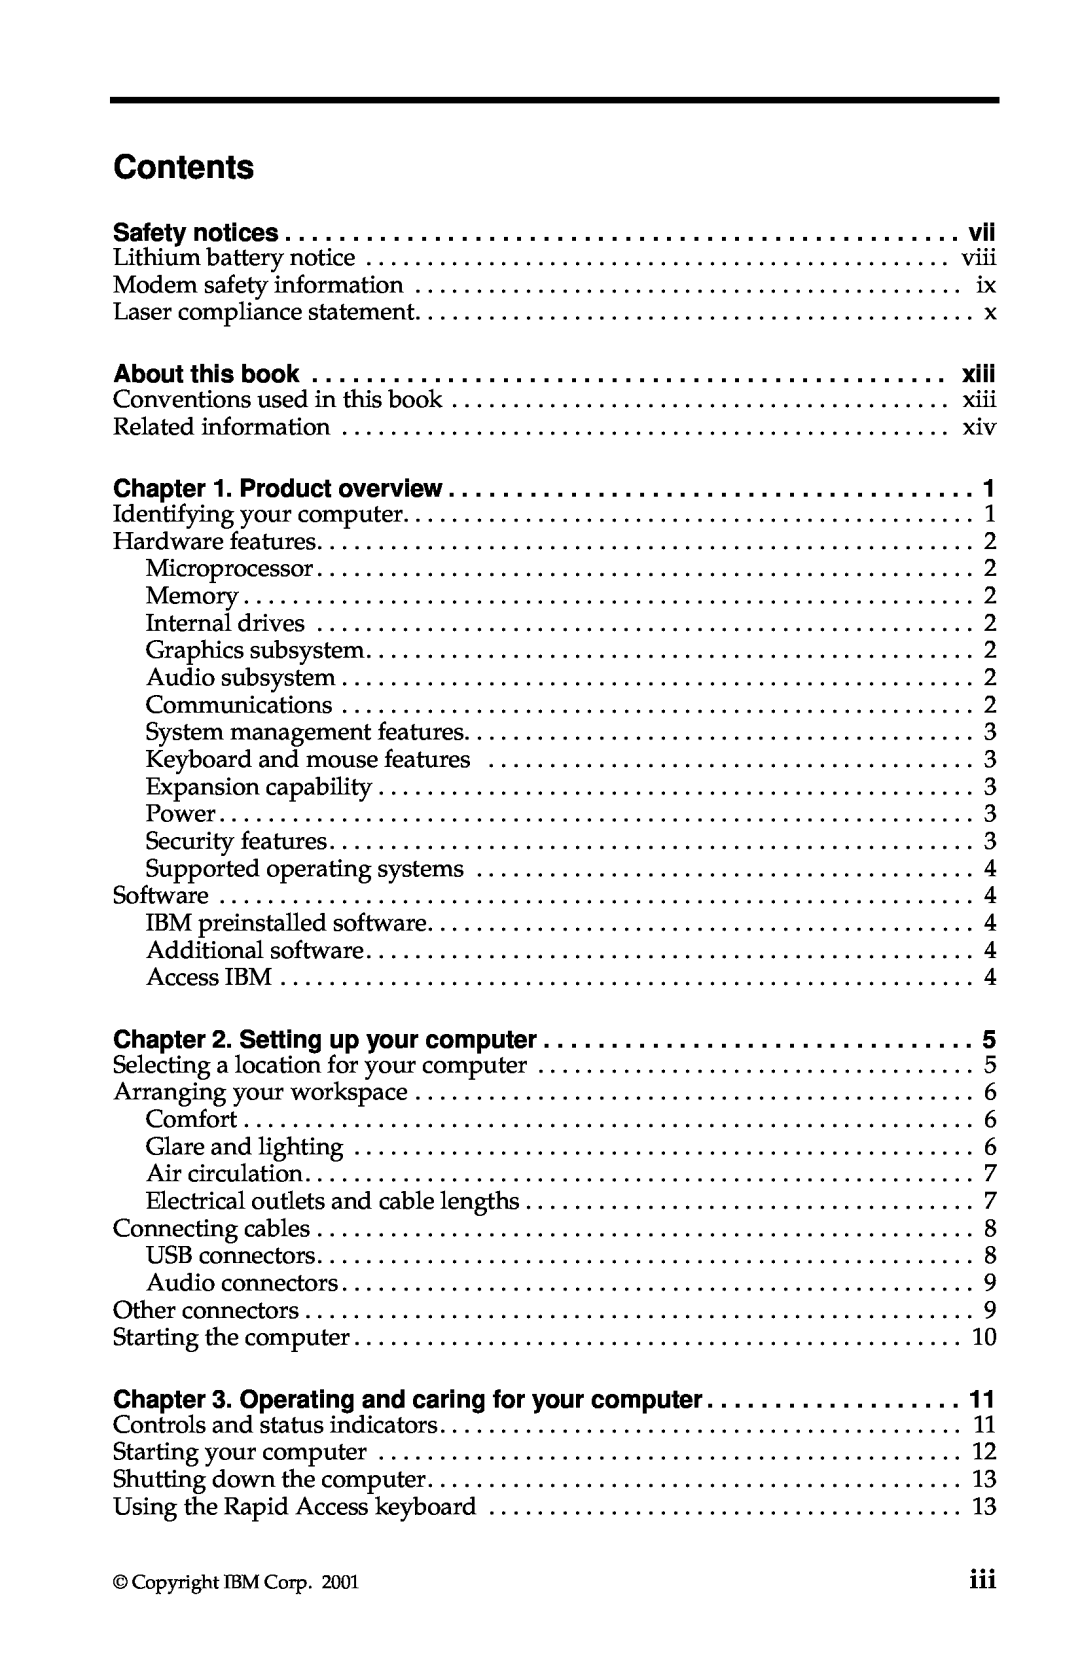 IBM 2283, 6274 manual Contents, Copyright IBM Corp 